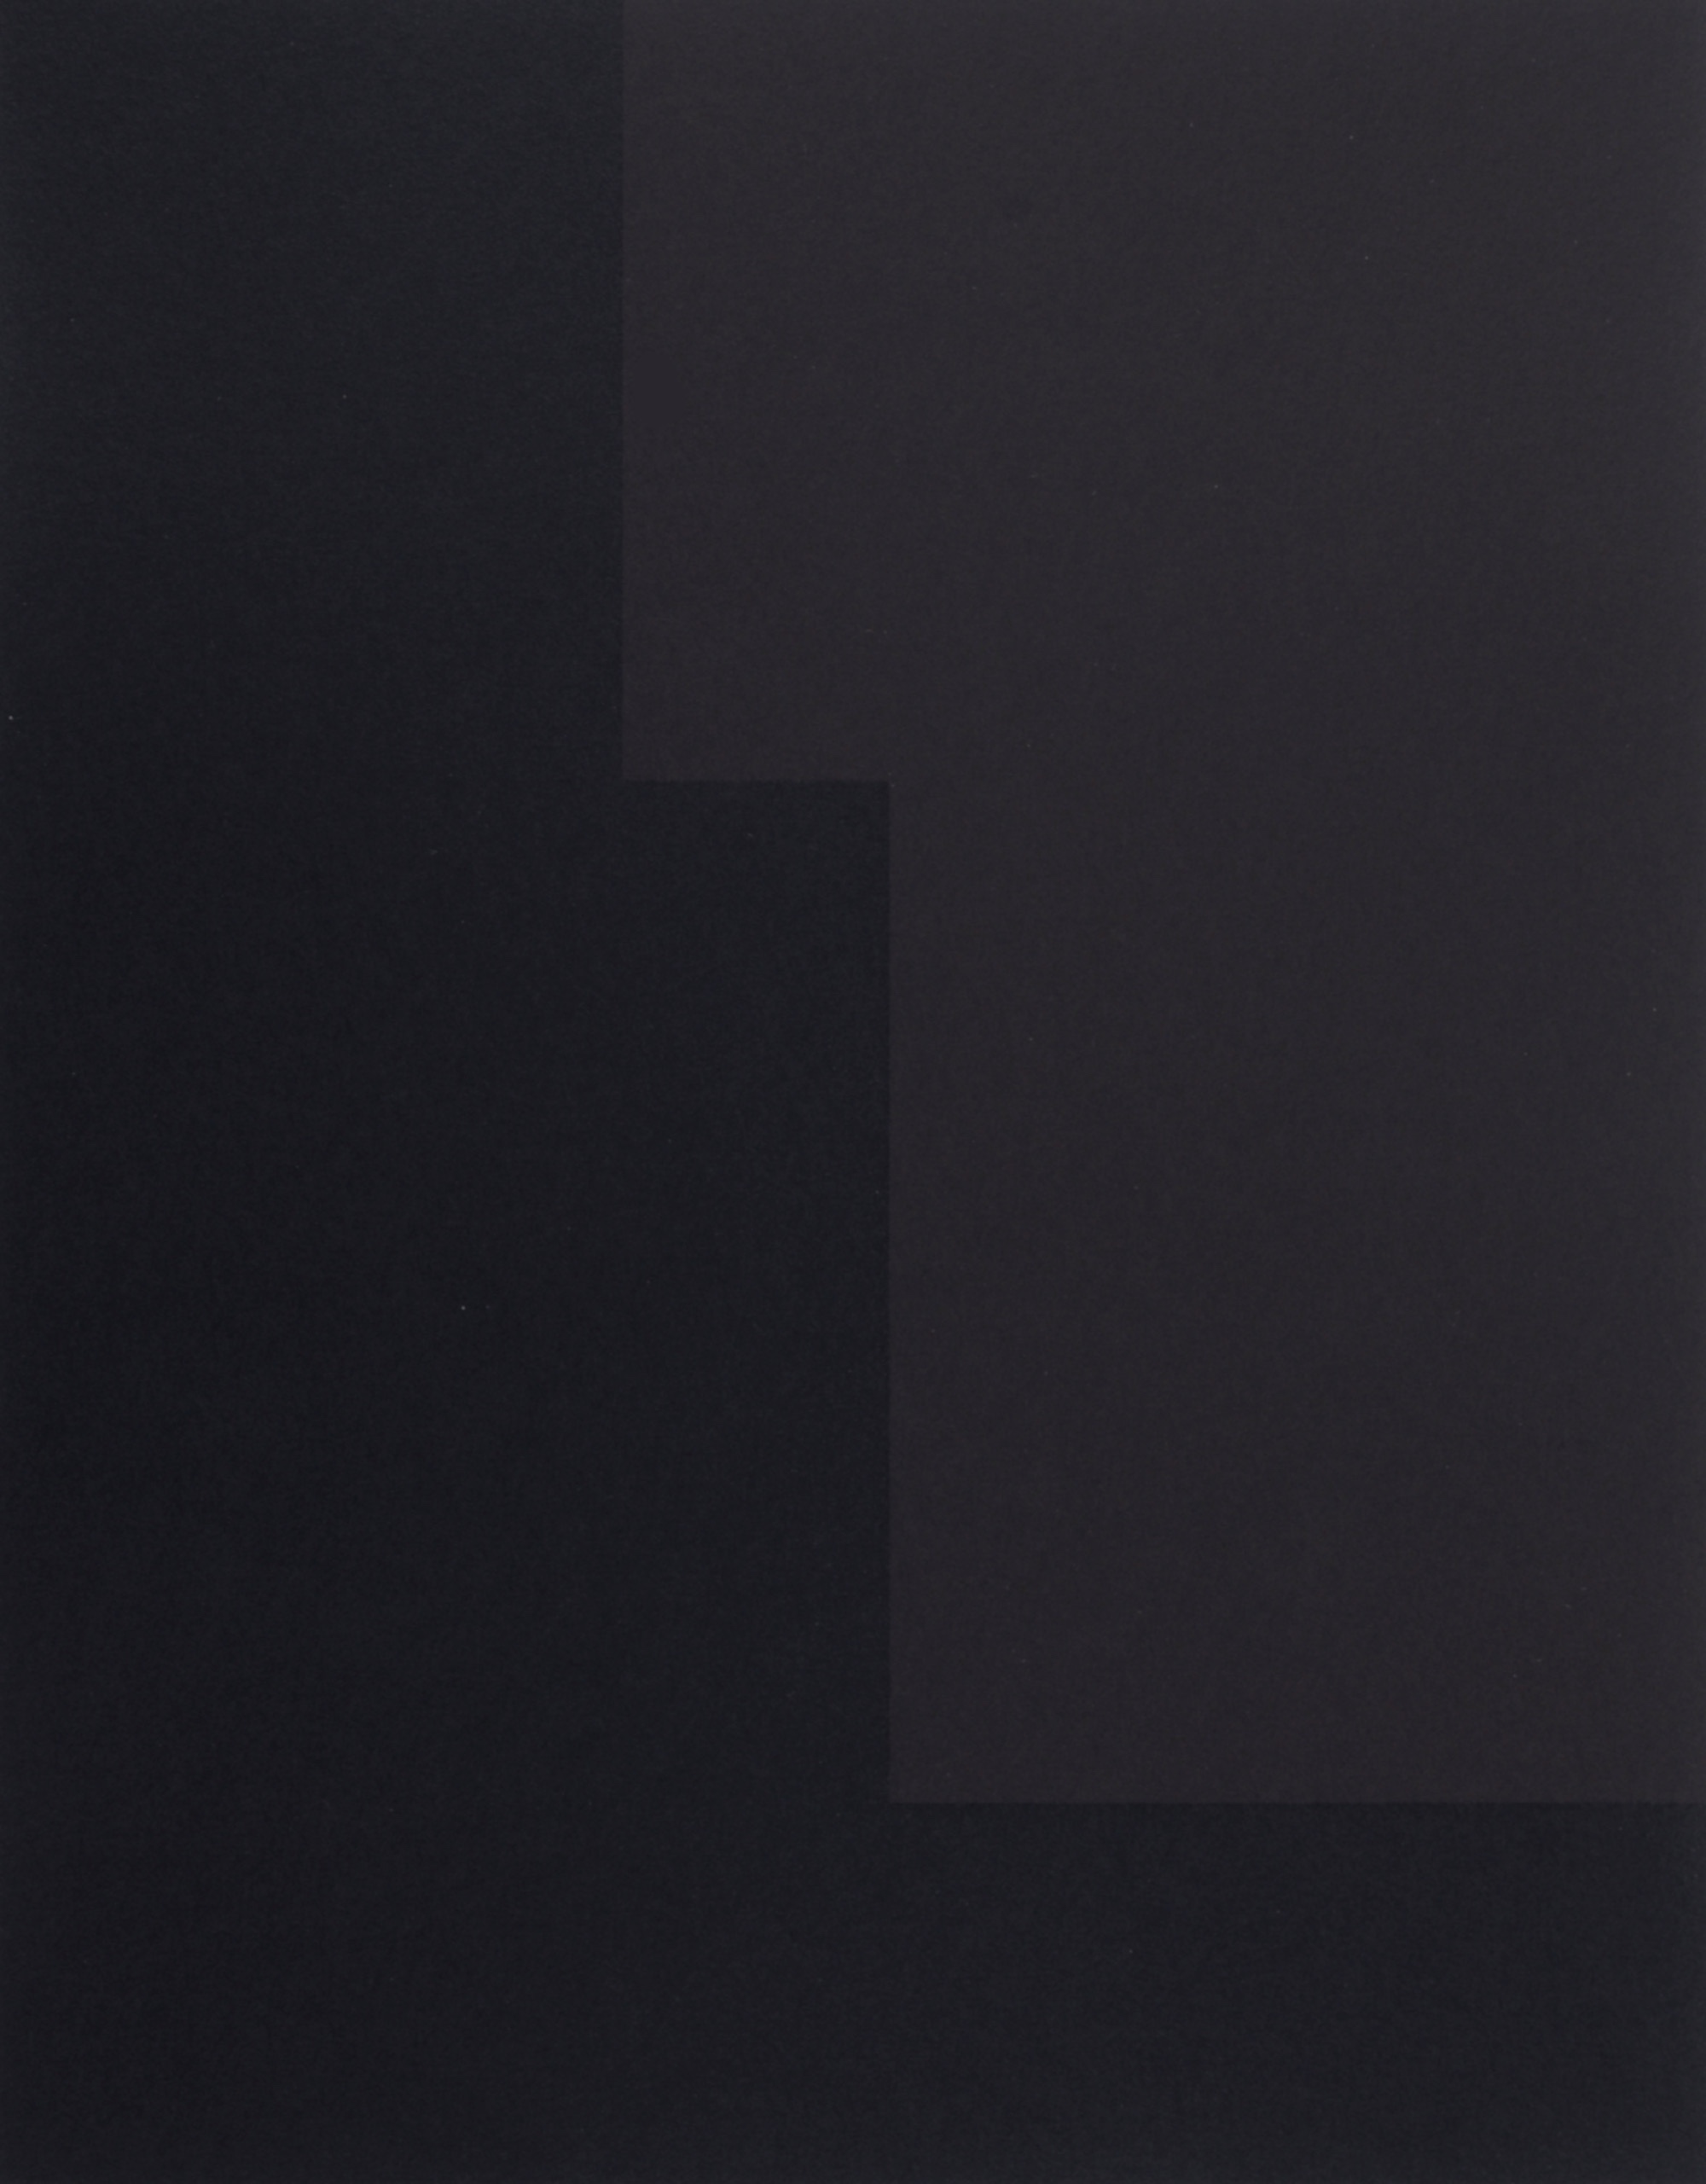 Hans Steinbrenner – Composition II, 1989 – NCAG